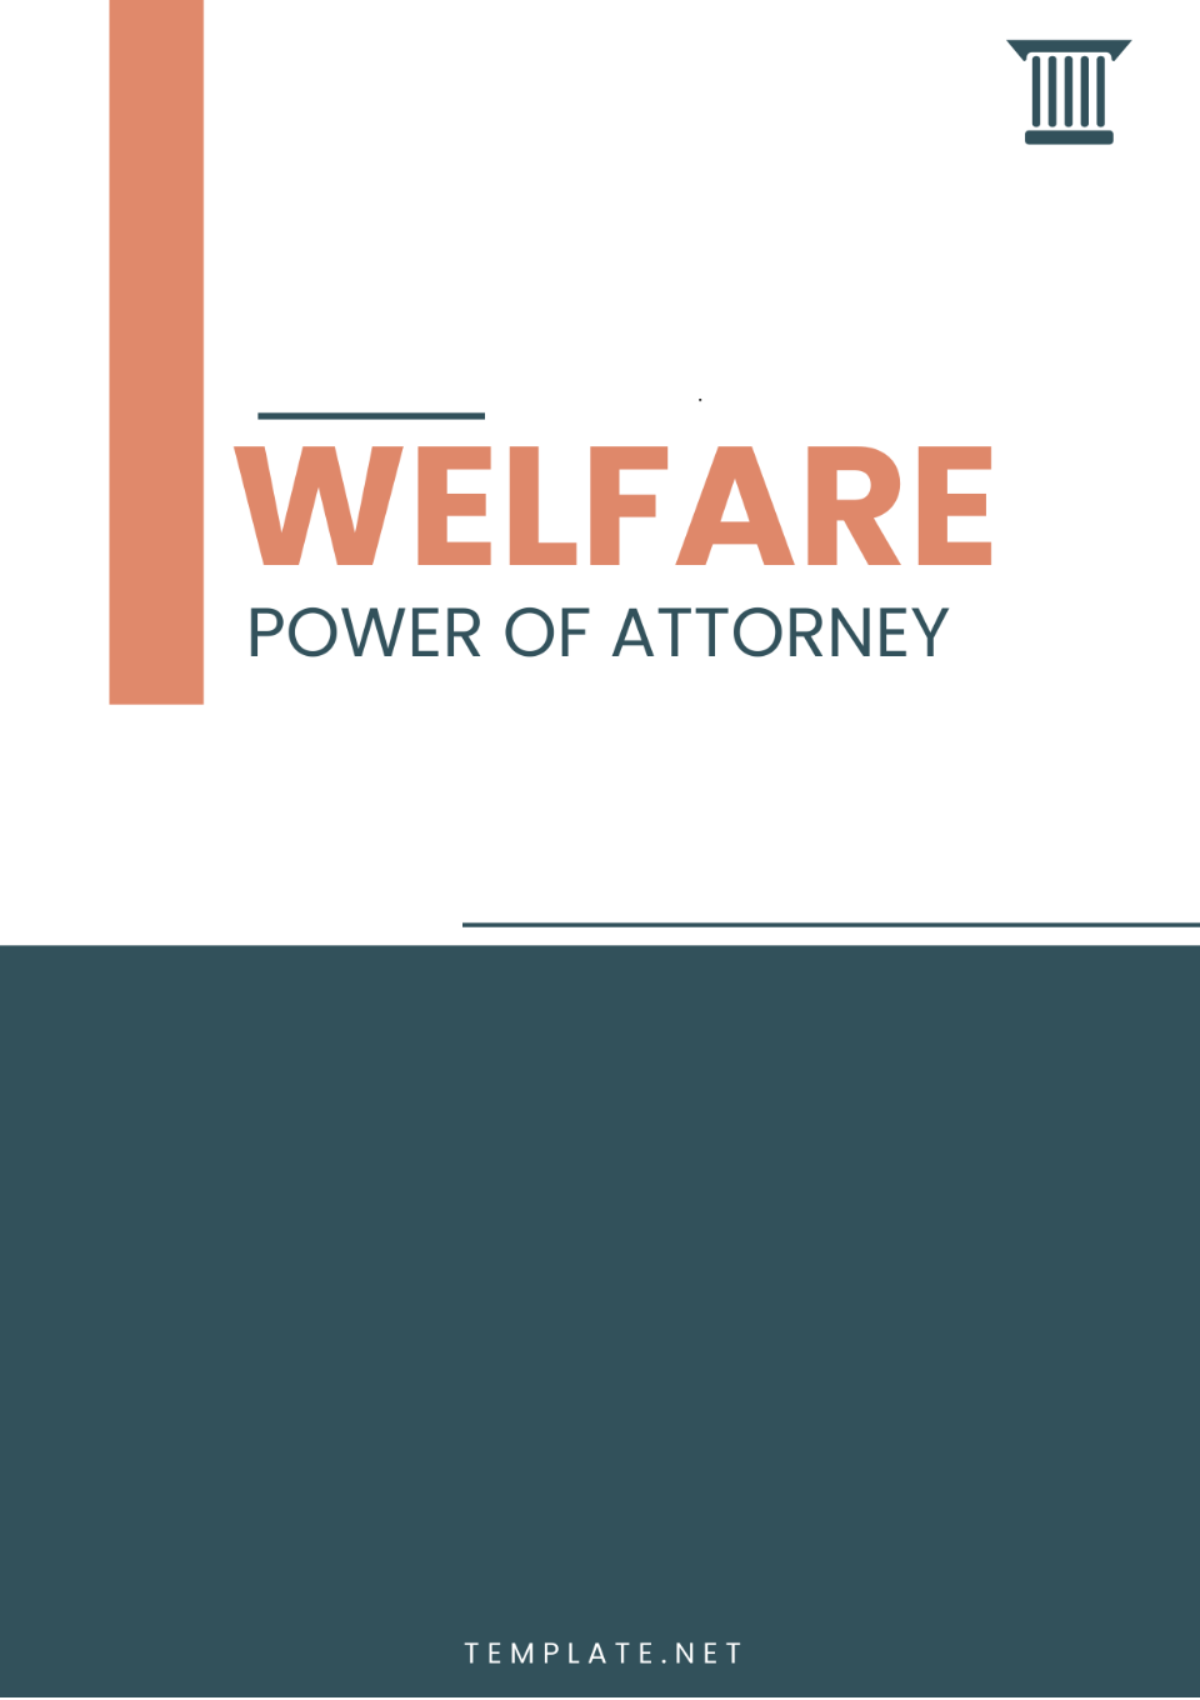 Welfare Power of Attorney Template